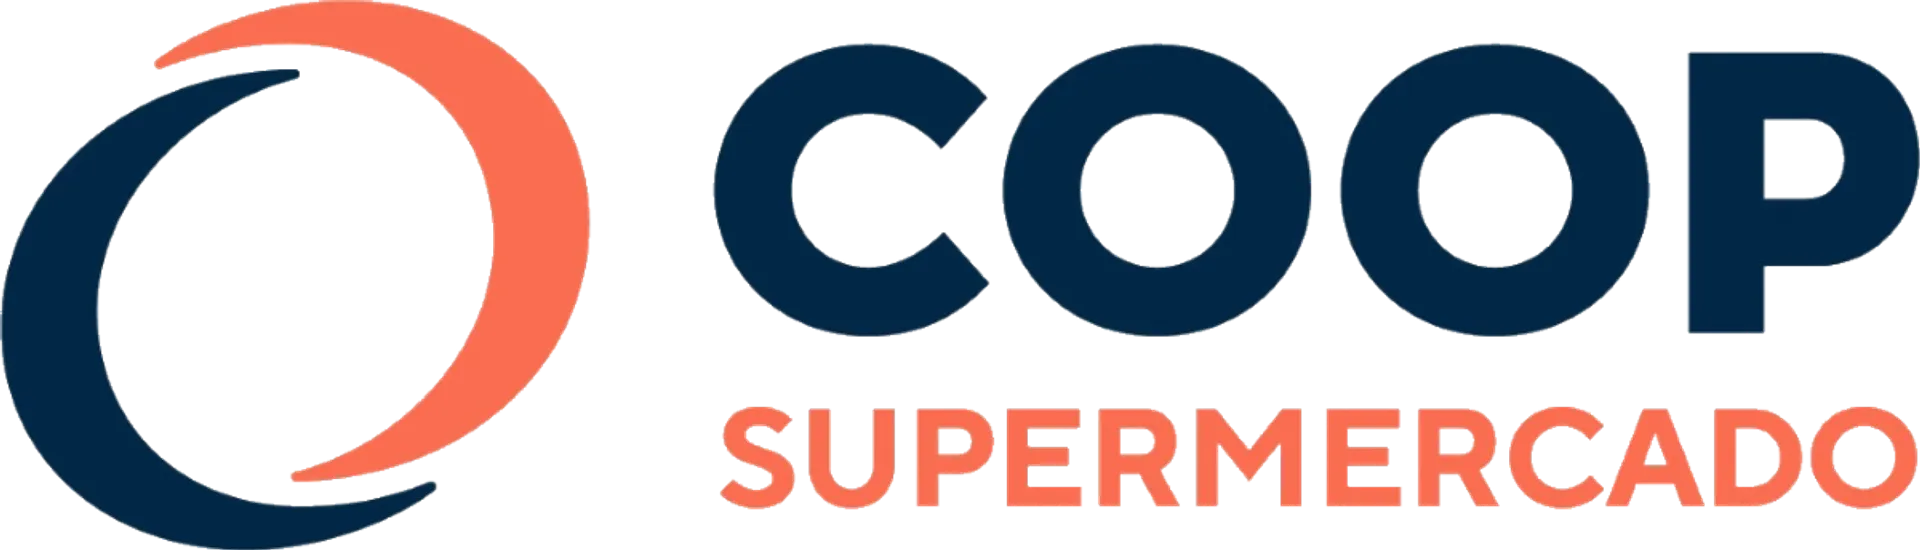 COOP logo